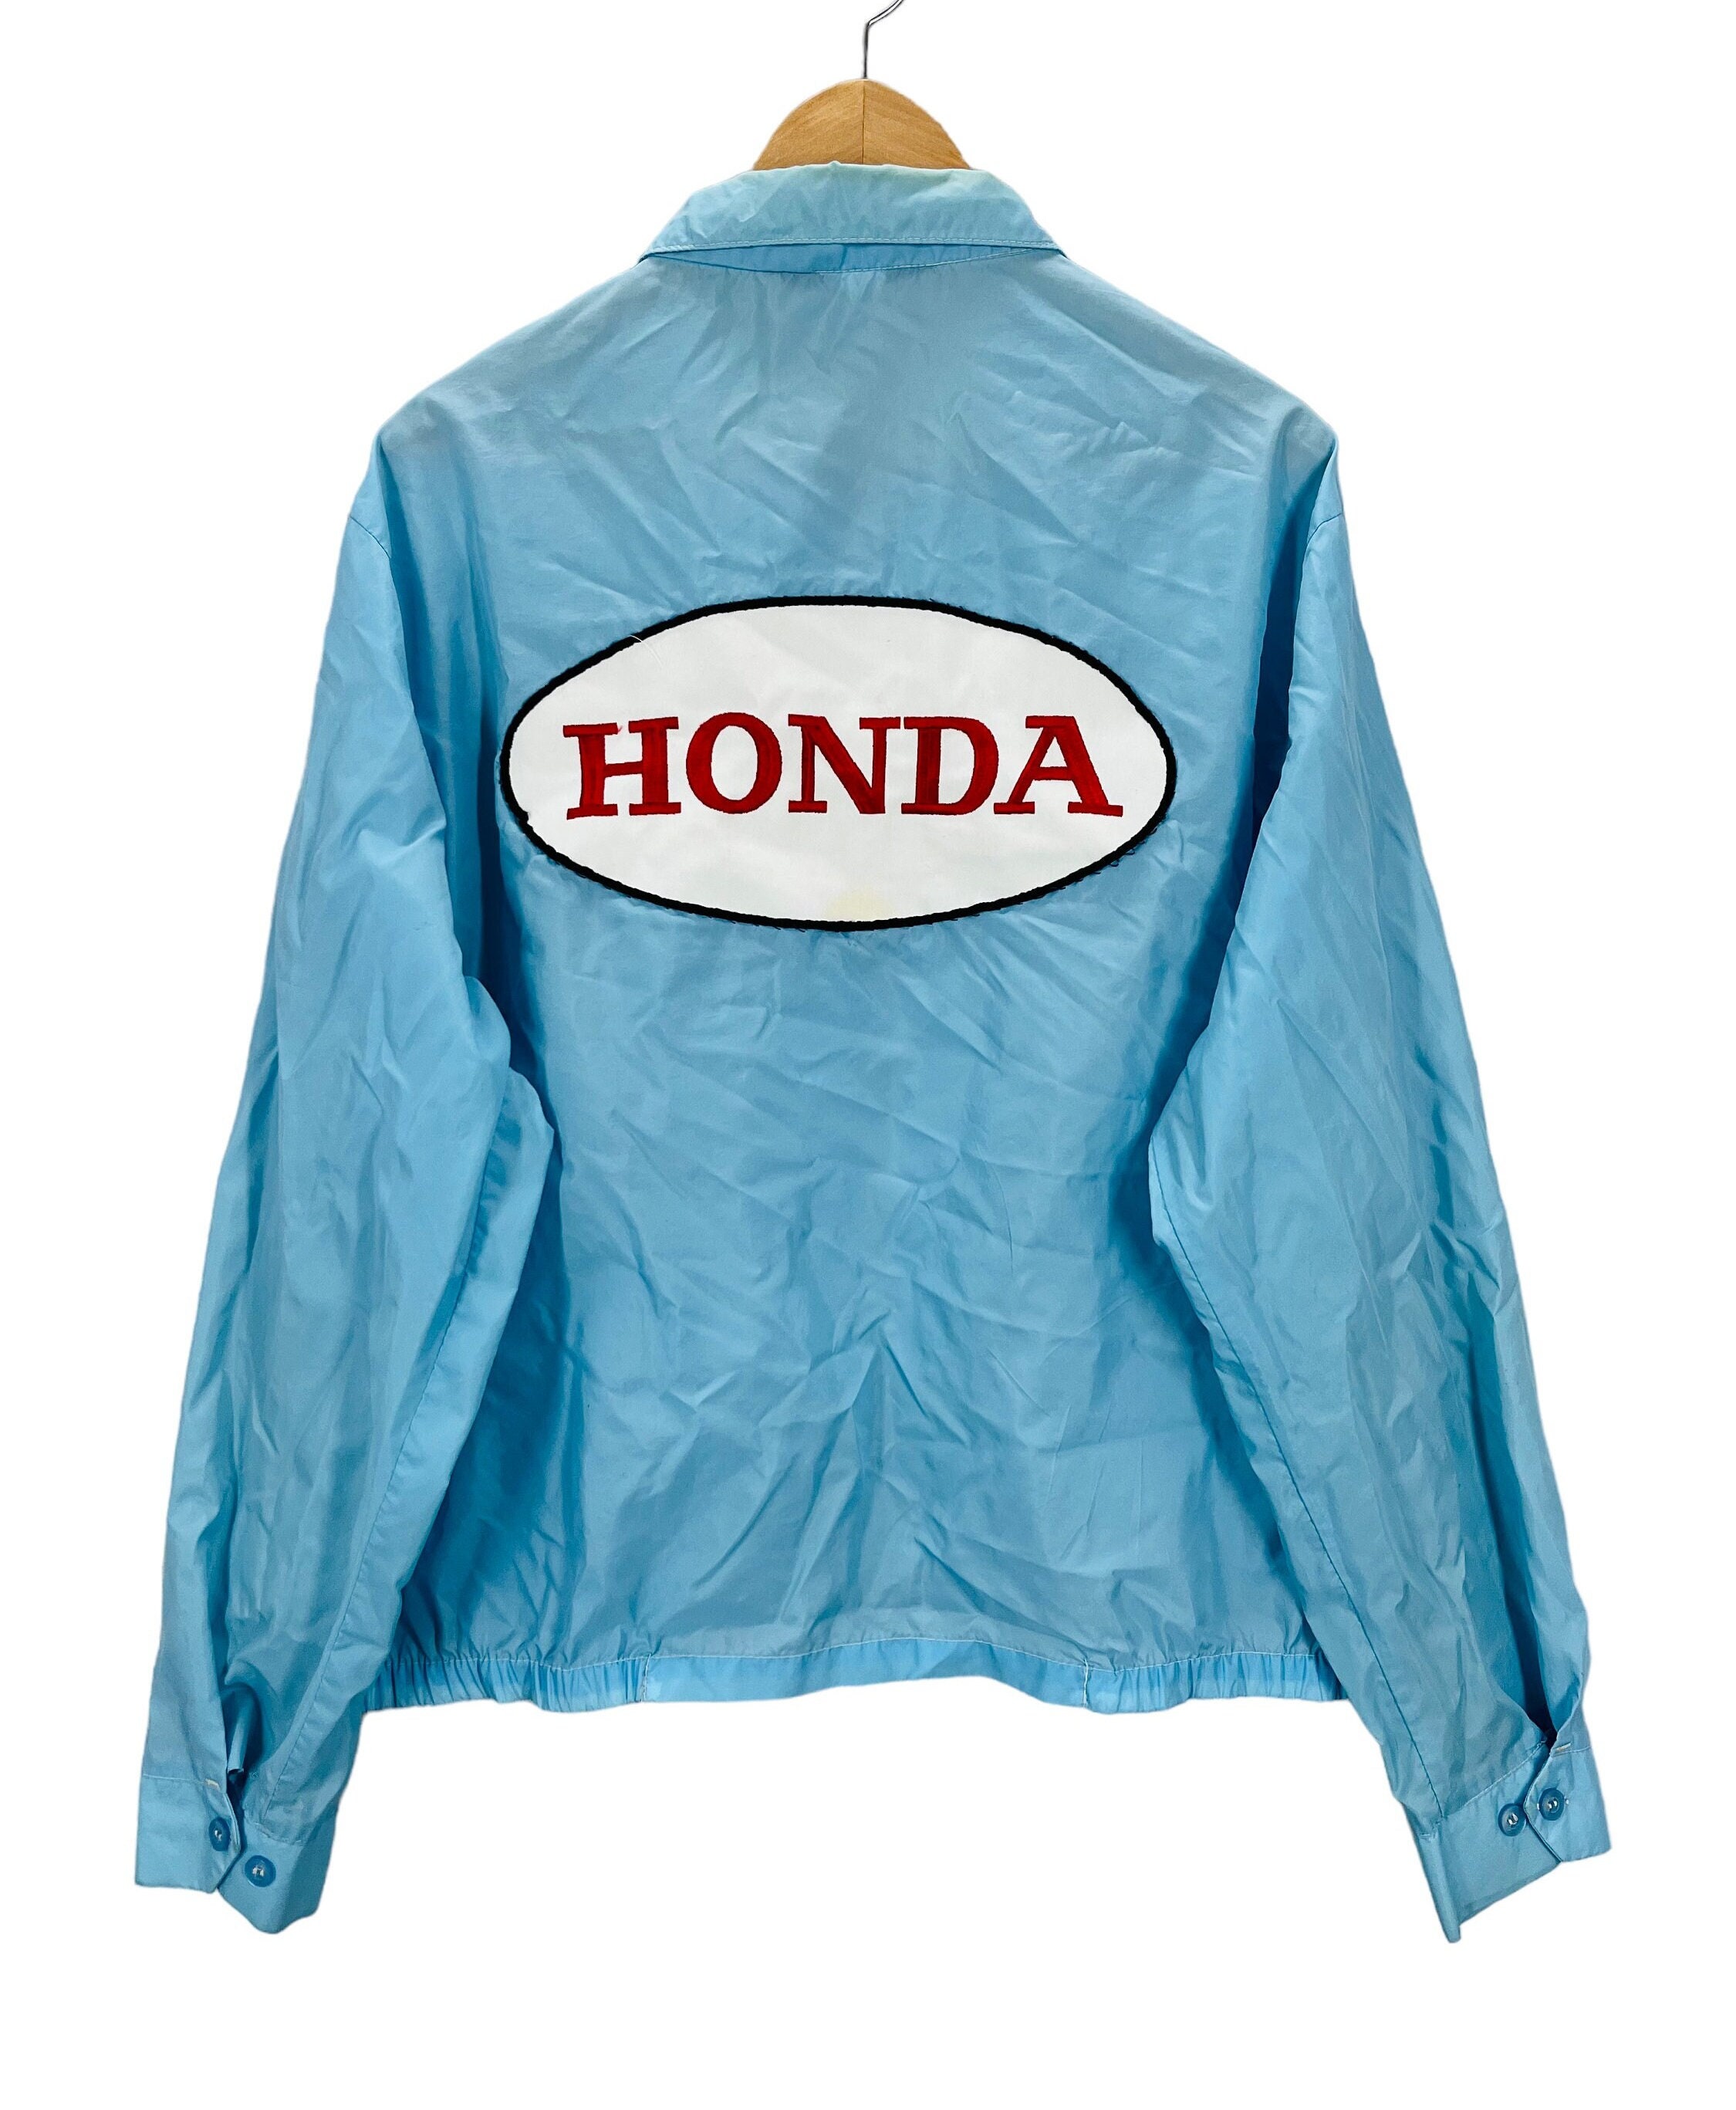 Honda jacket vintage - Etsy France